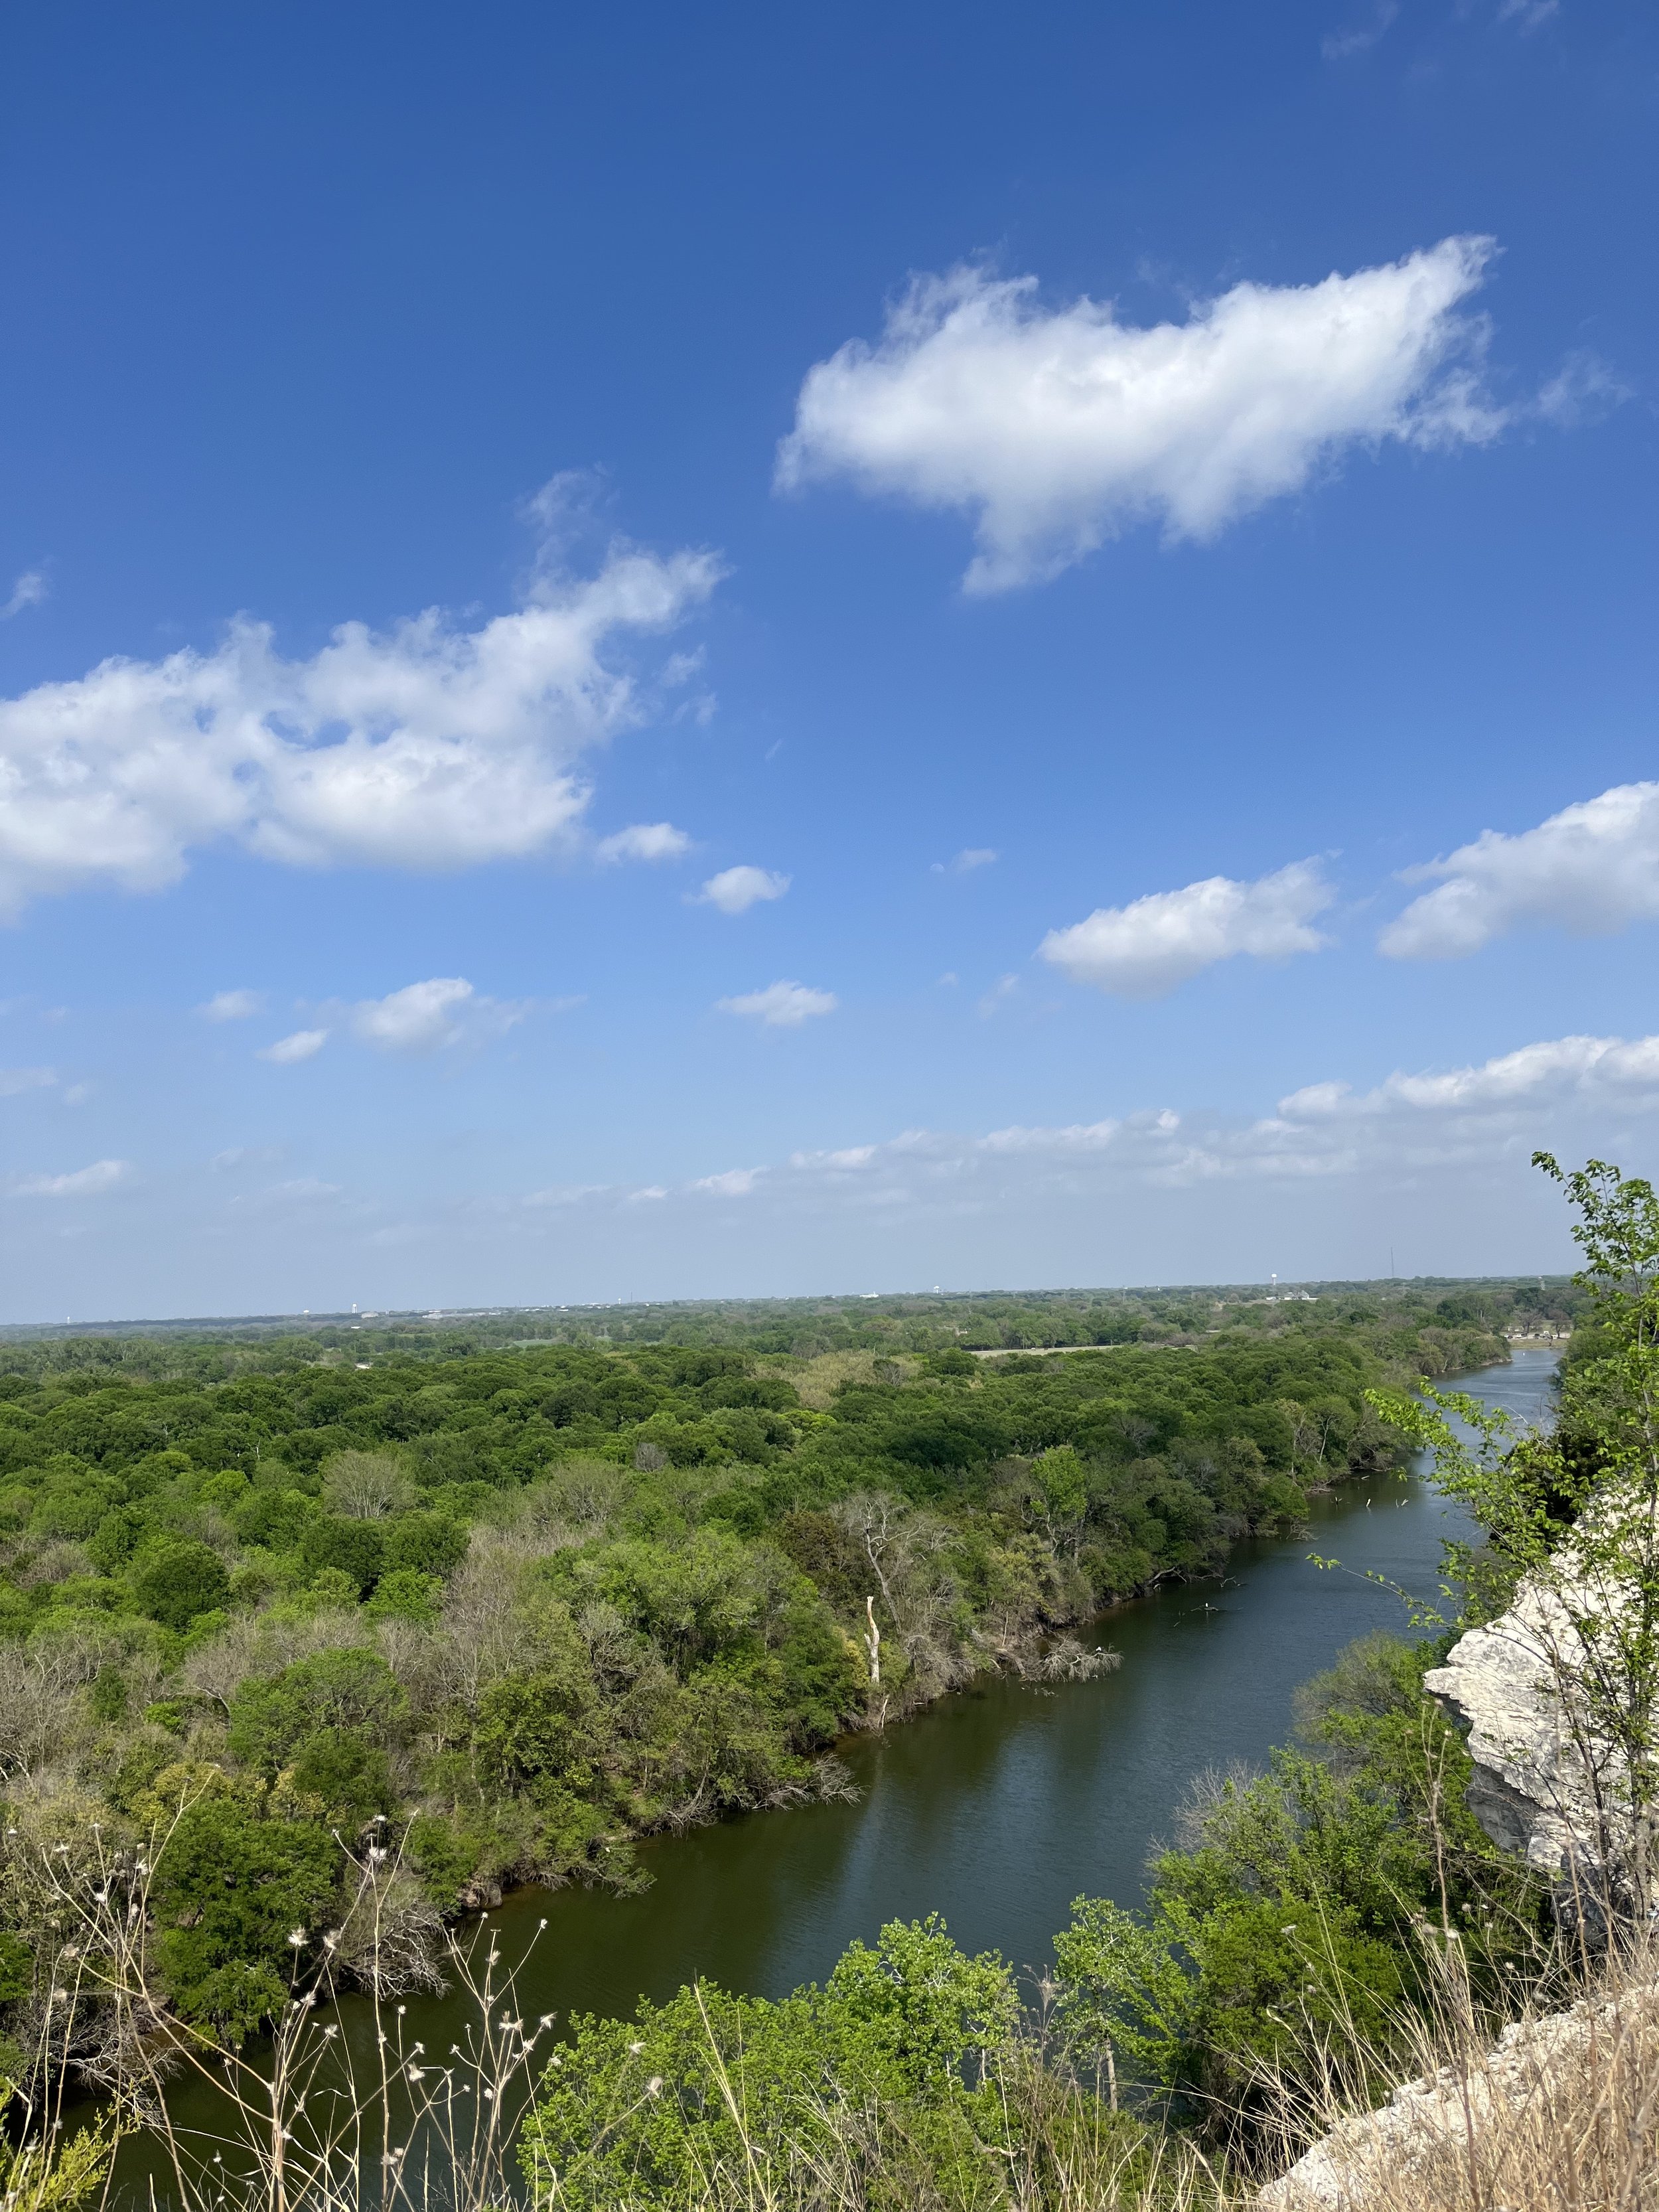 Bosque River in Waco, TX